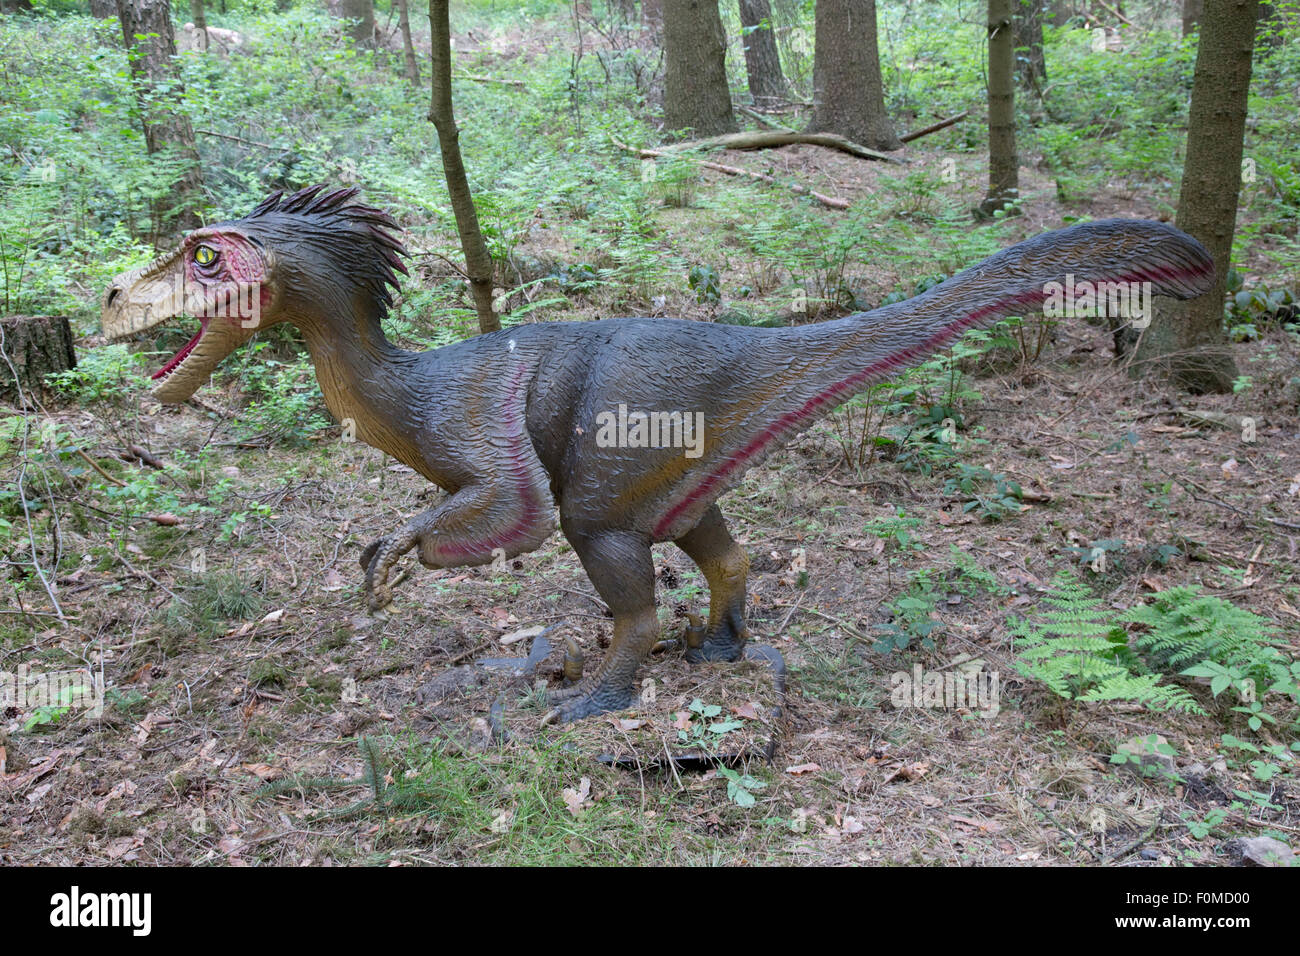 Troodon un uccello estinto-come theropod dinosauro del Cretaceo Dinosaurier Park Germania Foto Stock